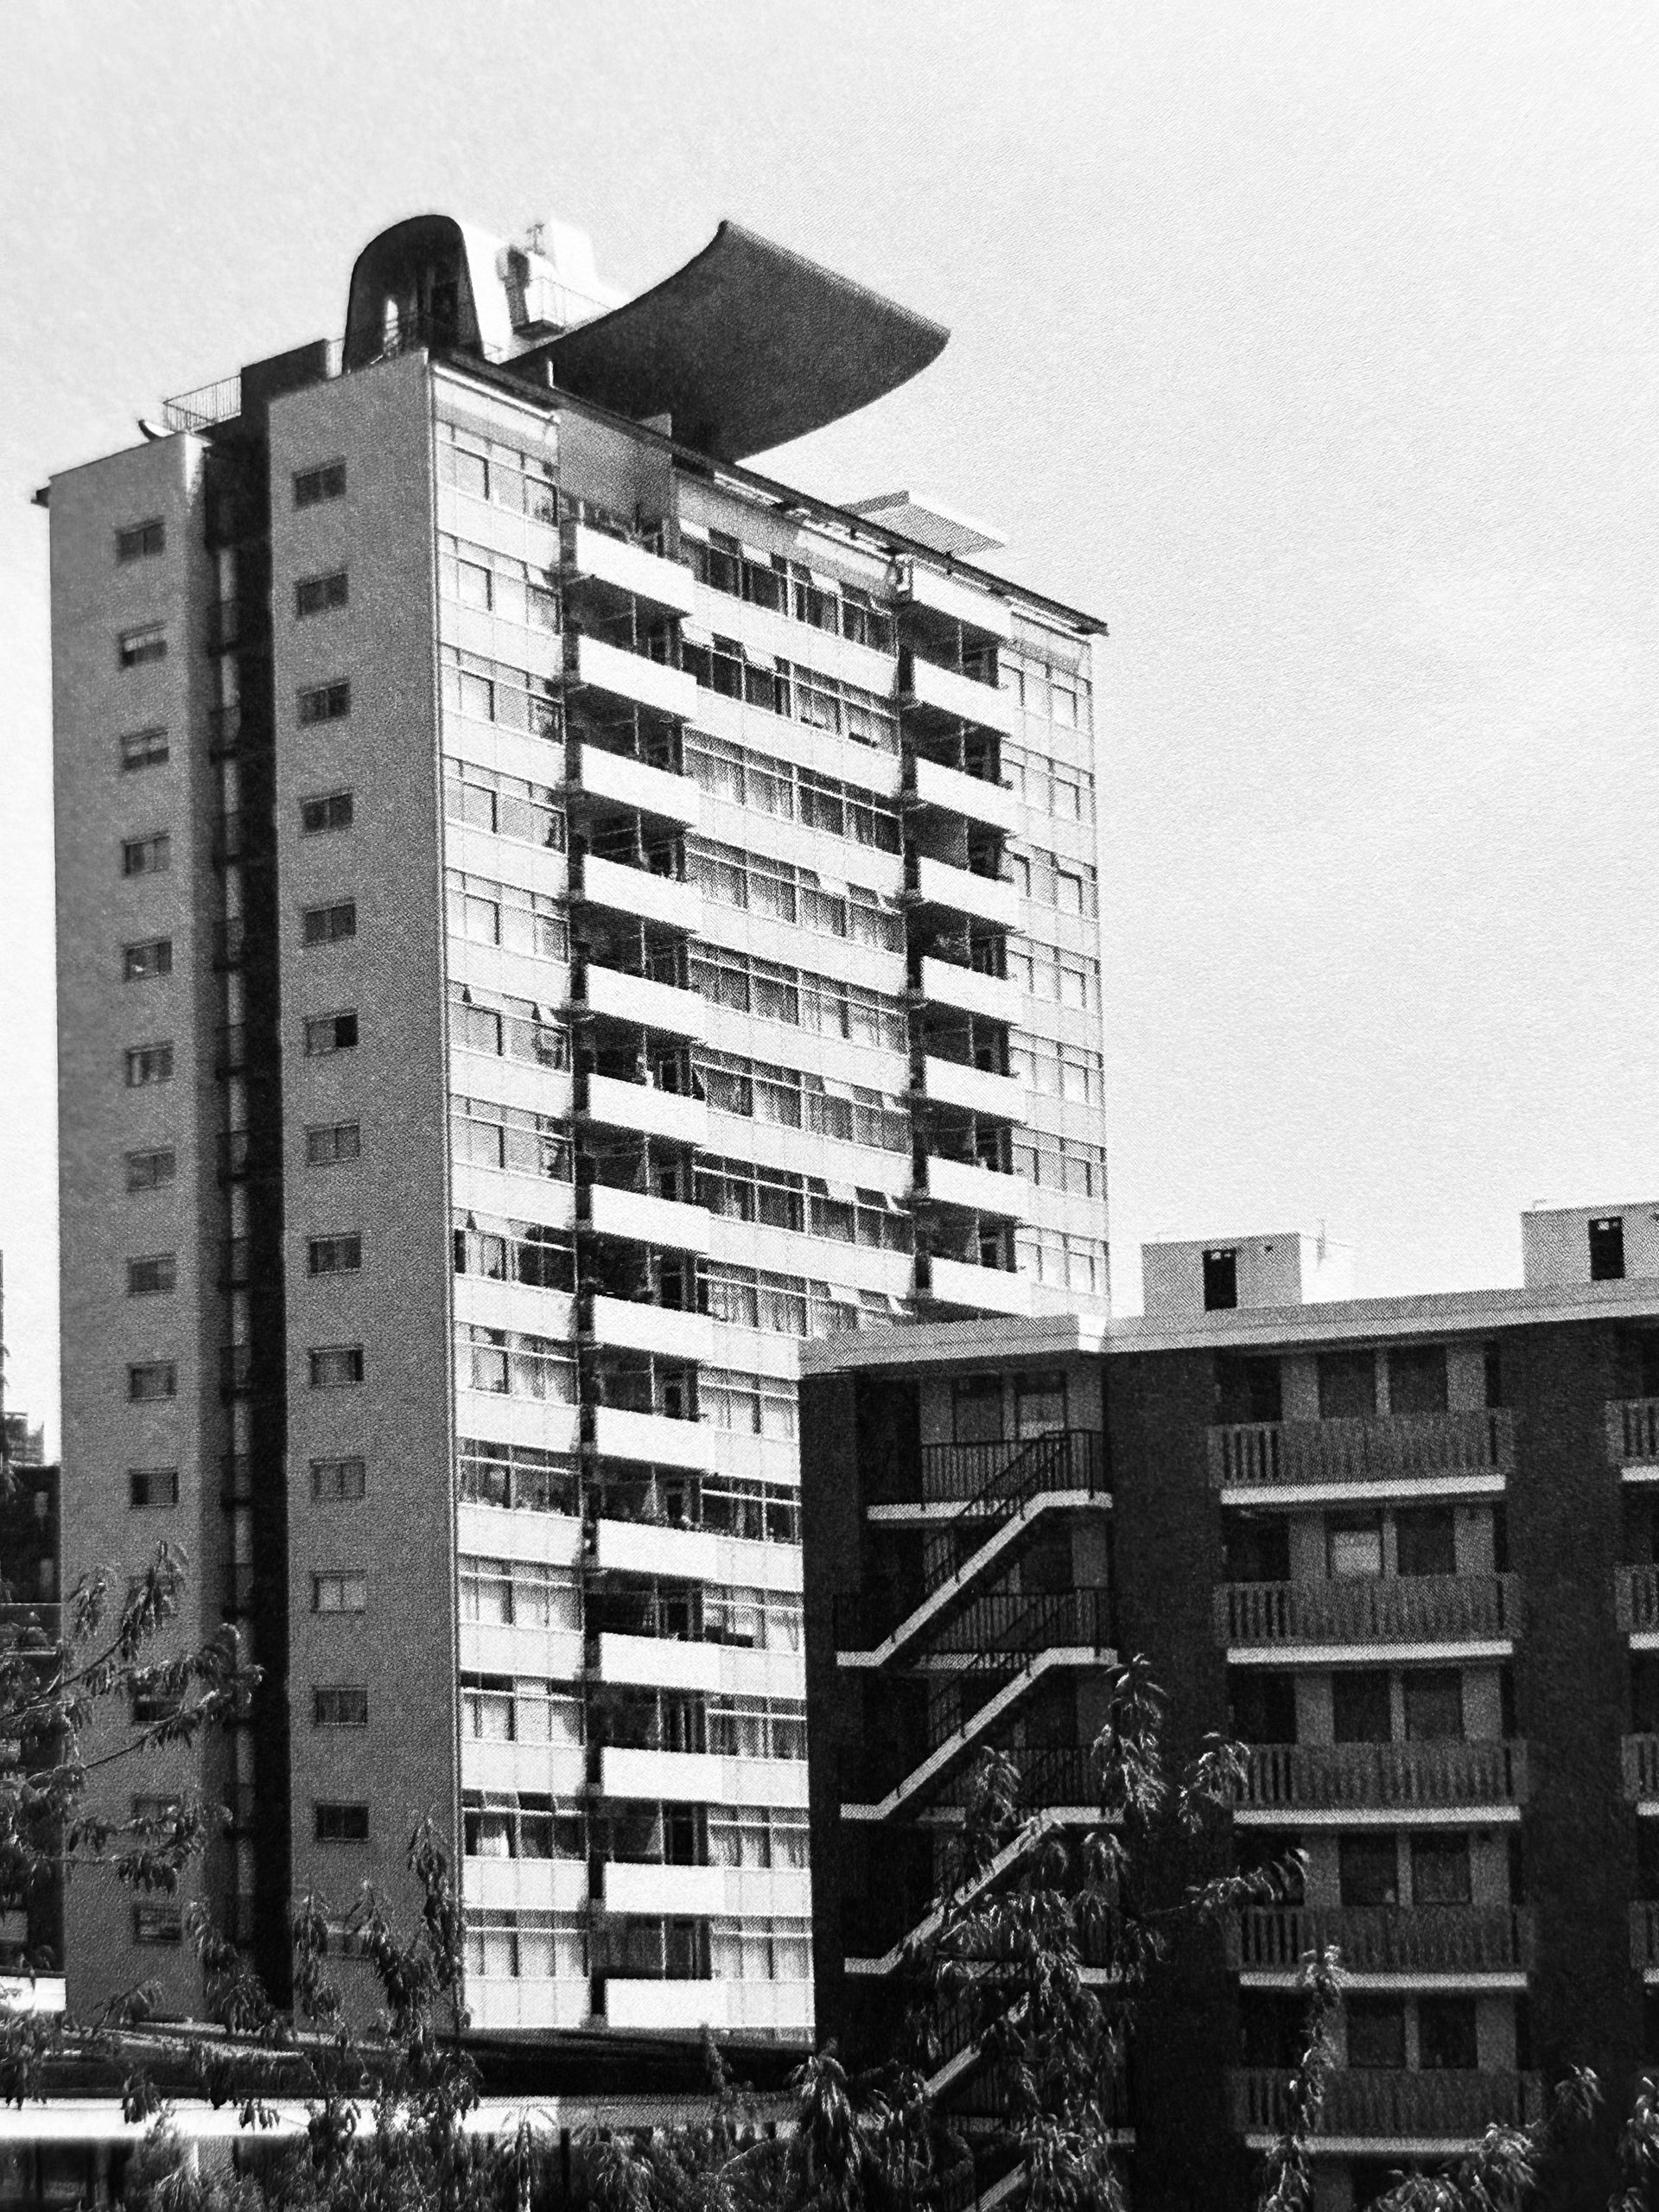 one more lovely brutalist building - Golden Lane Estate, London